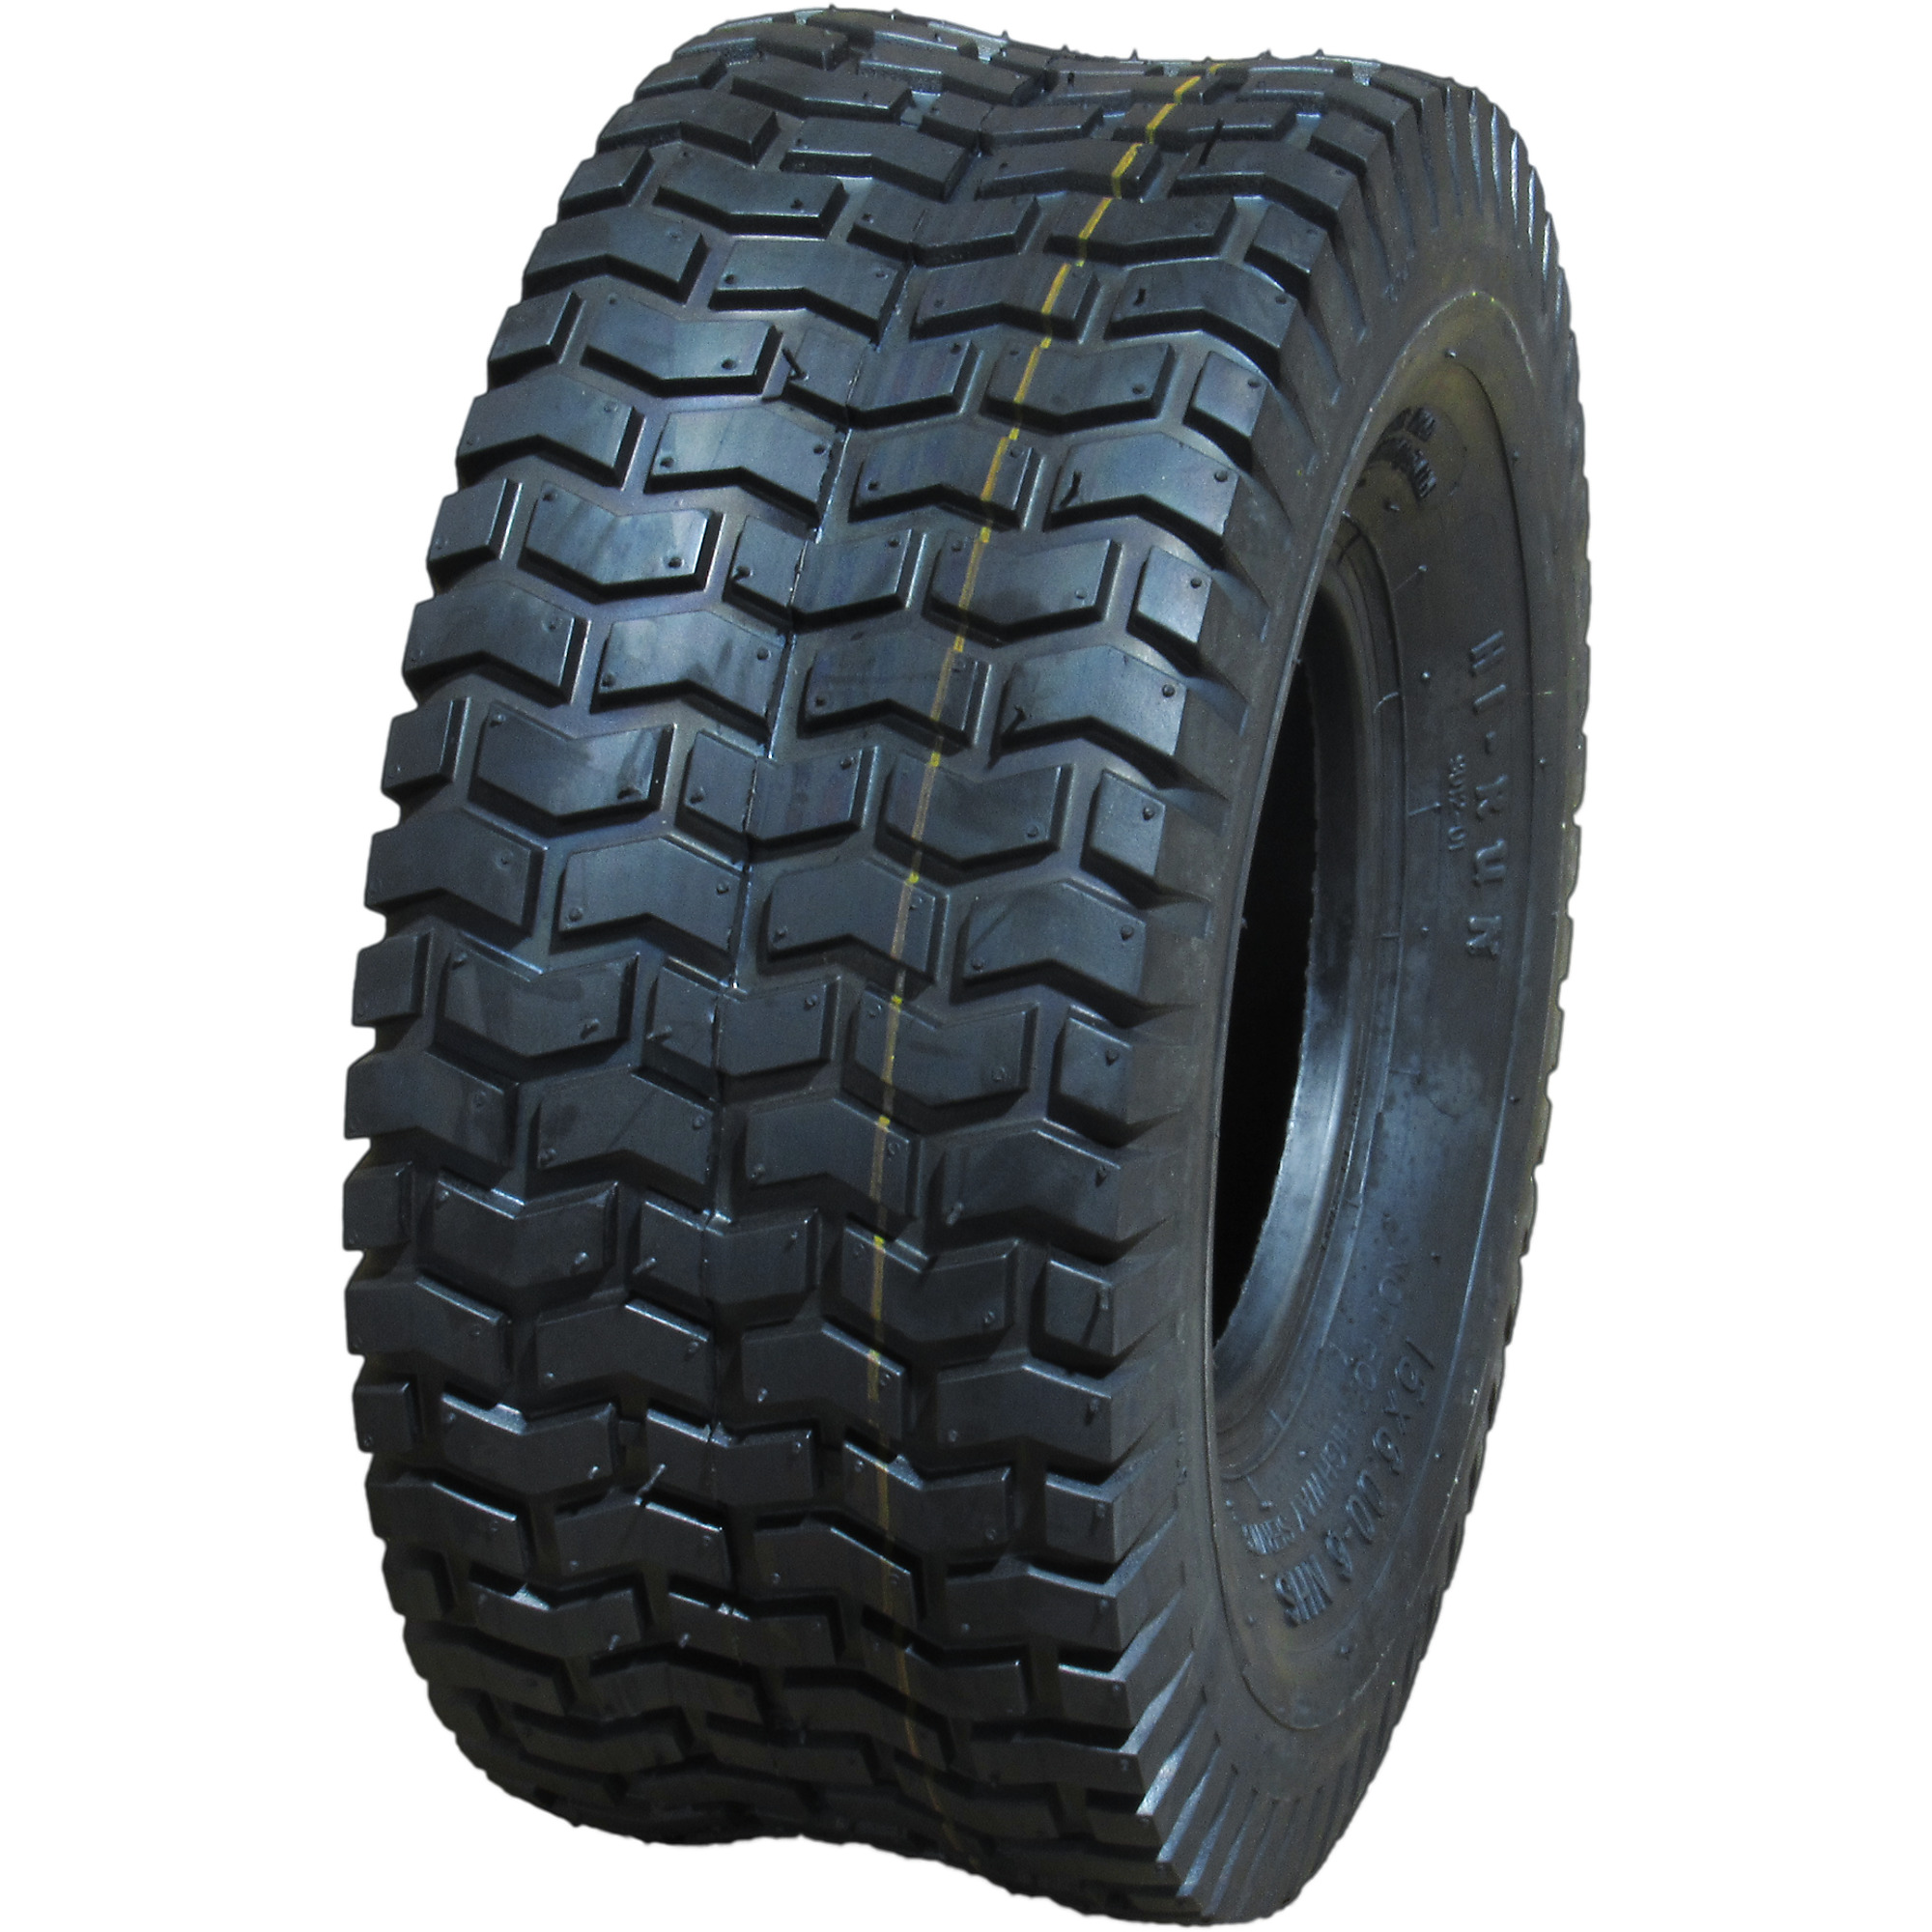 Lawn Garden Tire, SU12 Turf II, Tire Size 13X5.00-6, Load Range Rating B, Model - HI-RUN WD1277